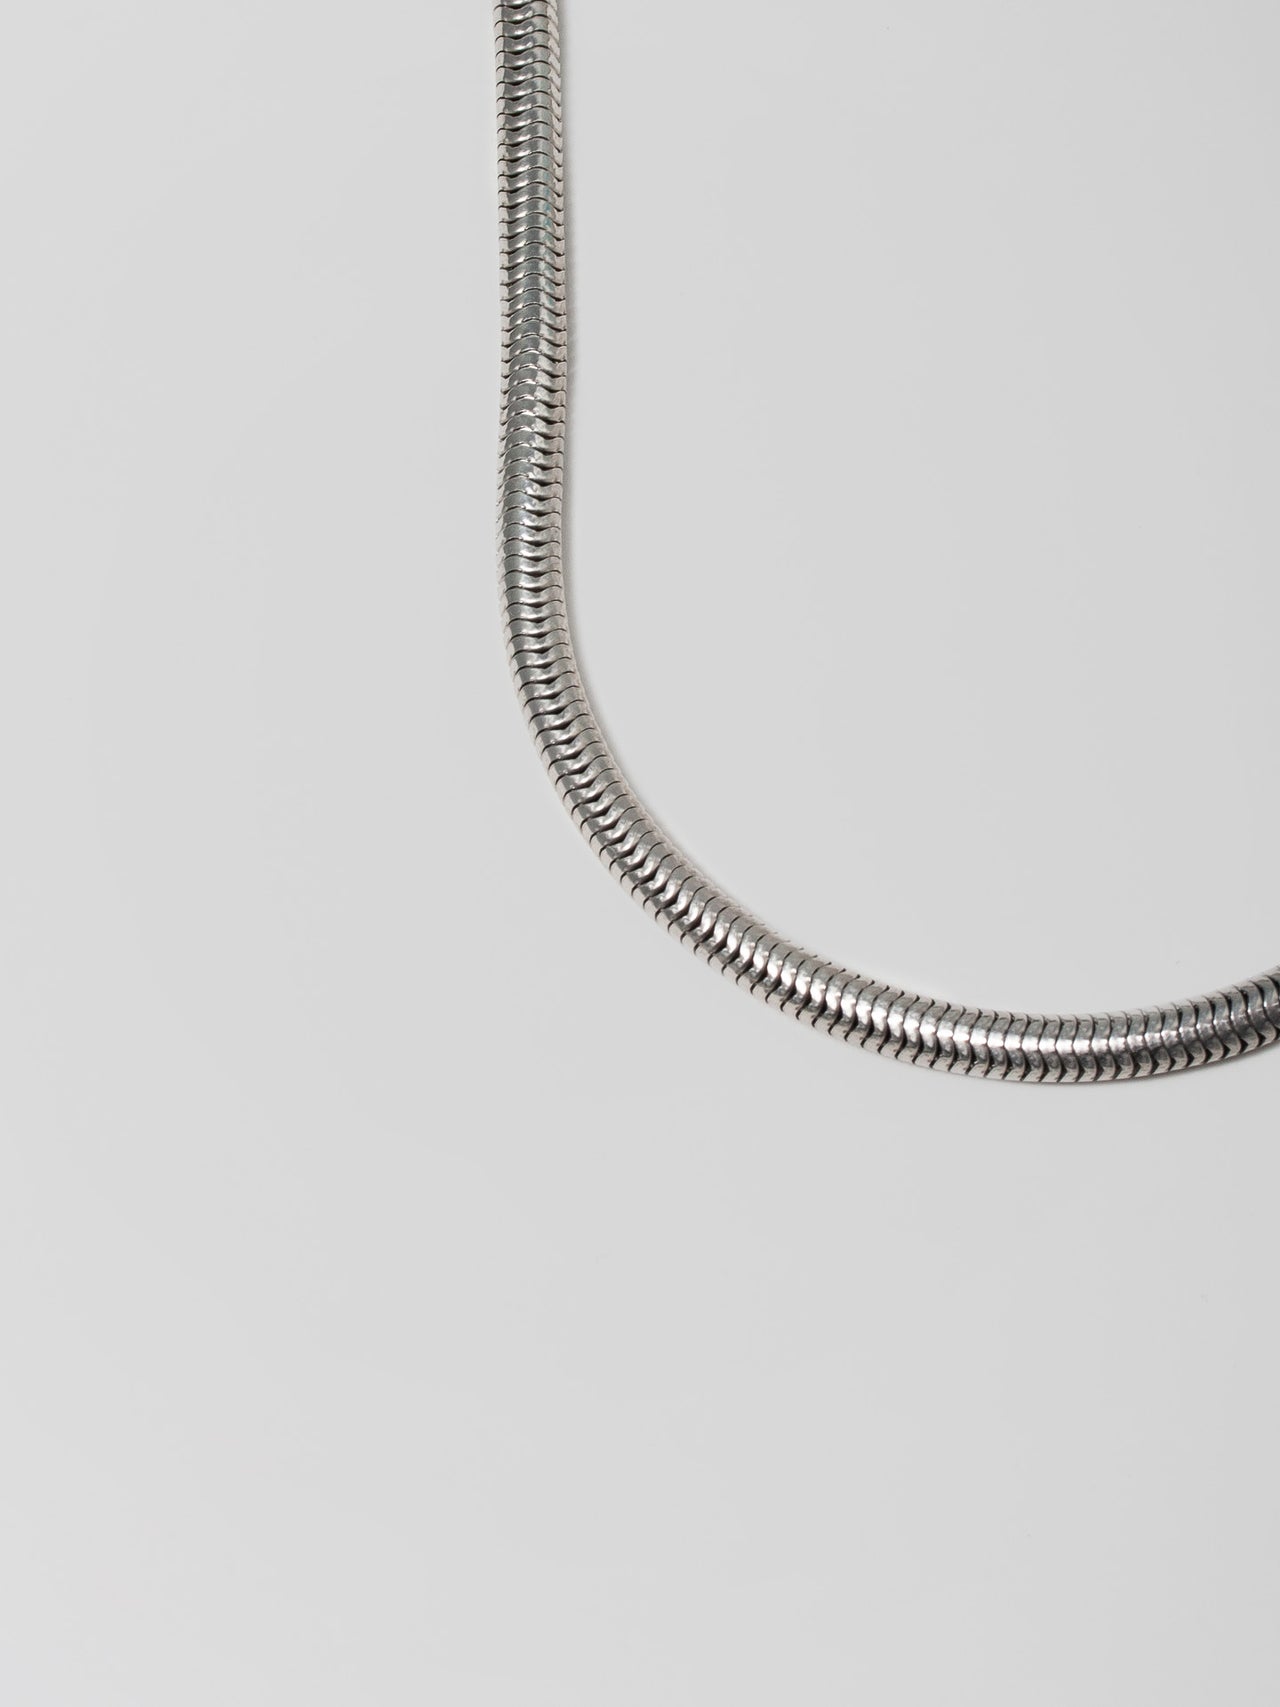 Sterling Silver XXL Snake Chain Necklace shot on light grey background.